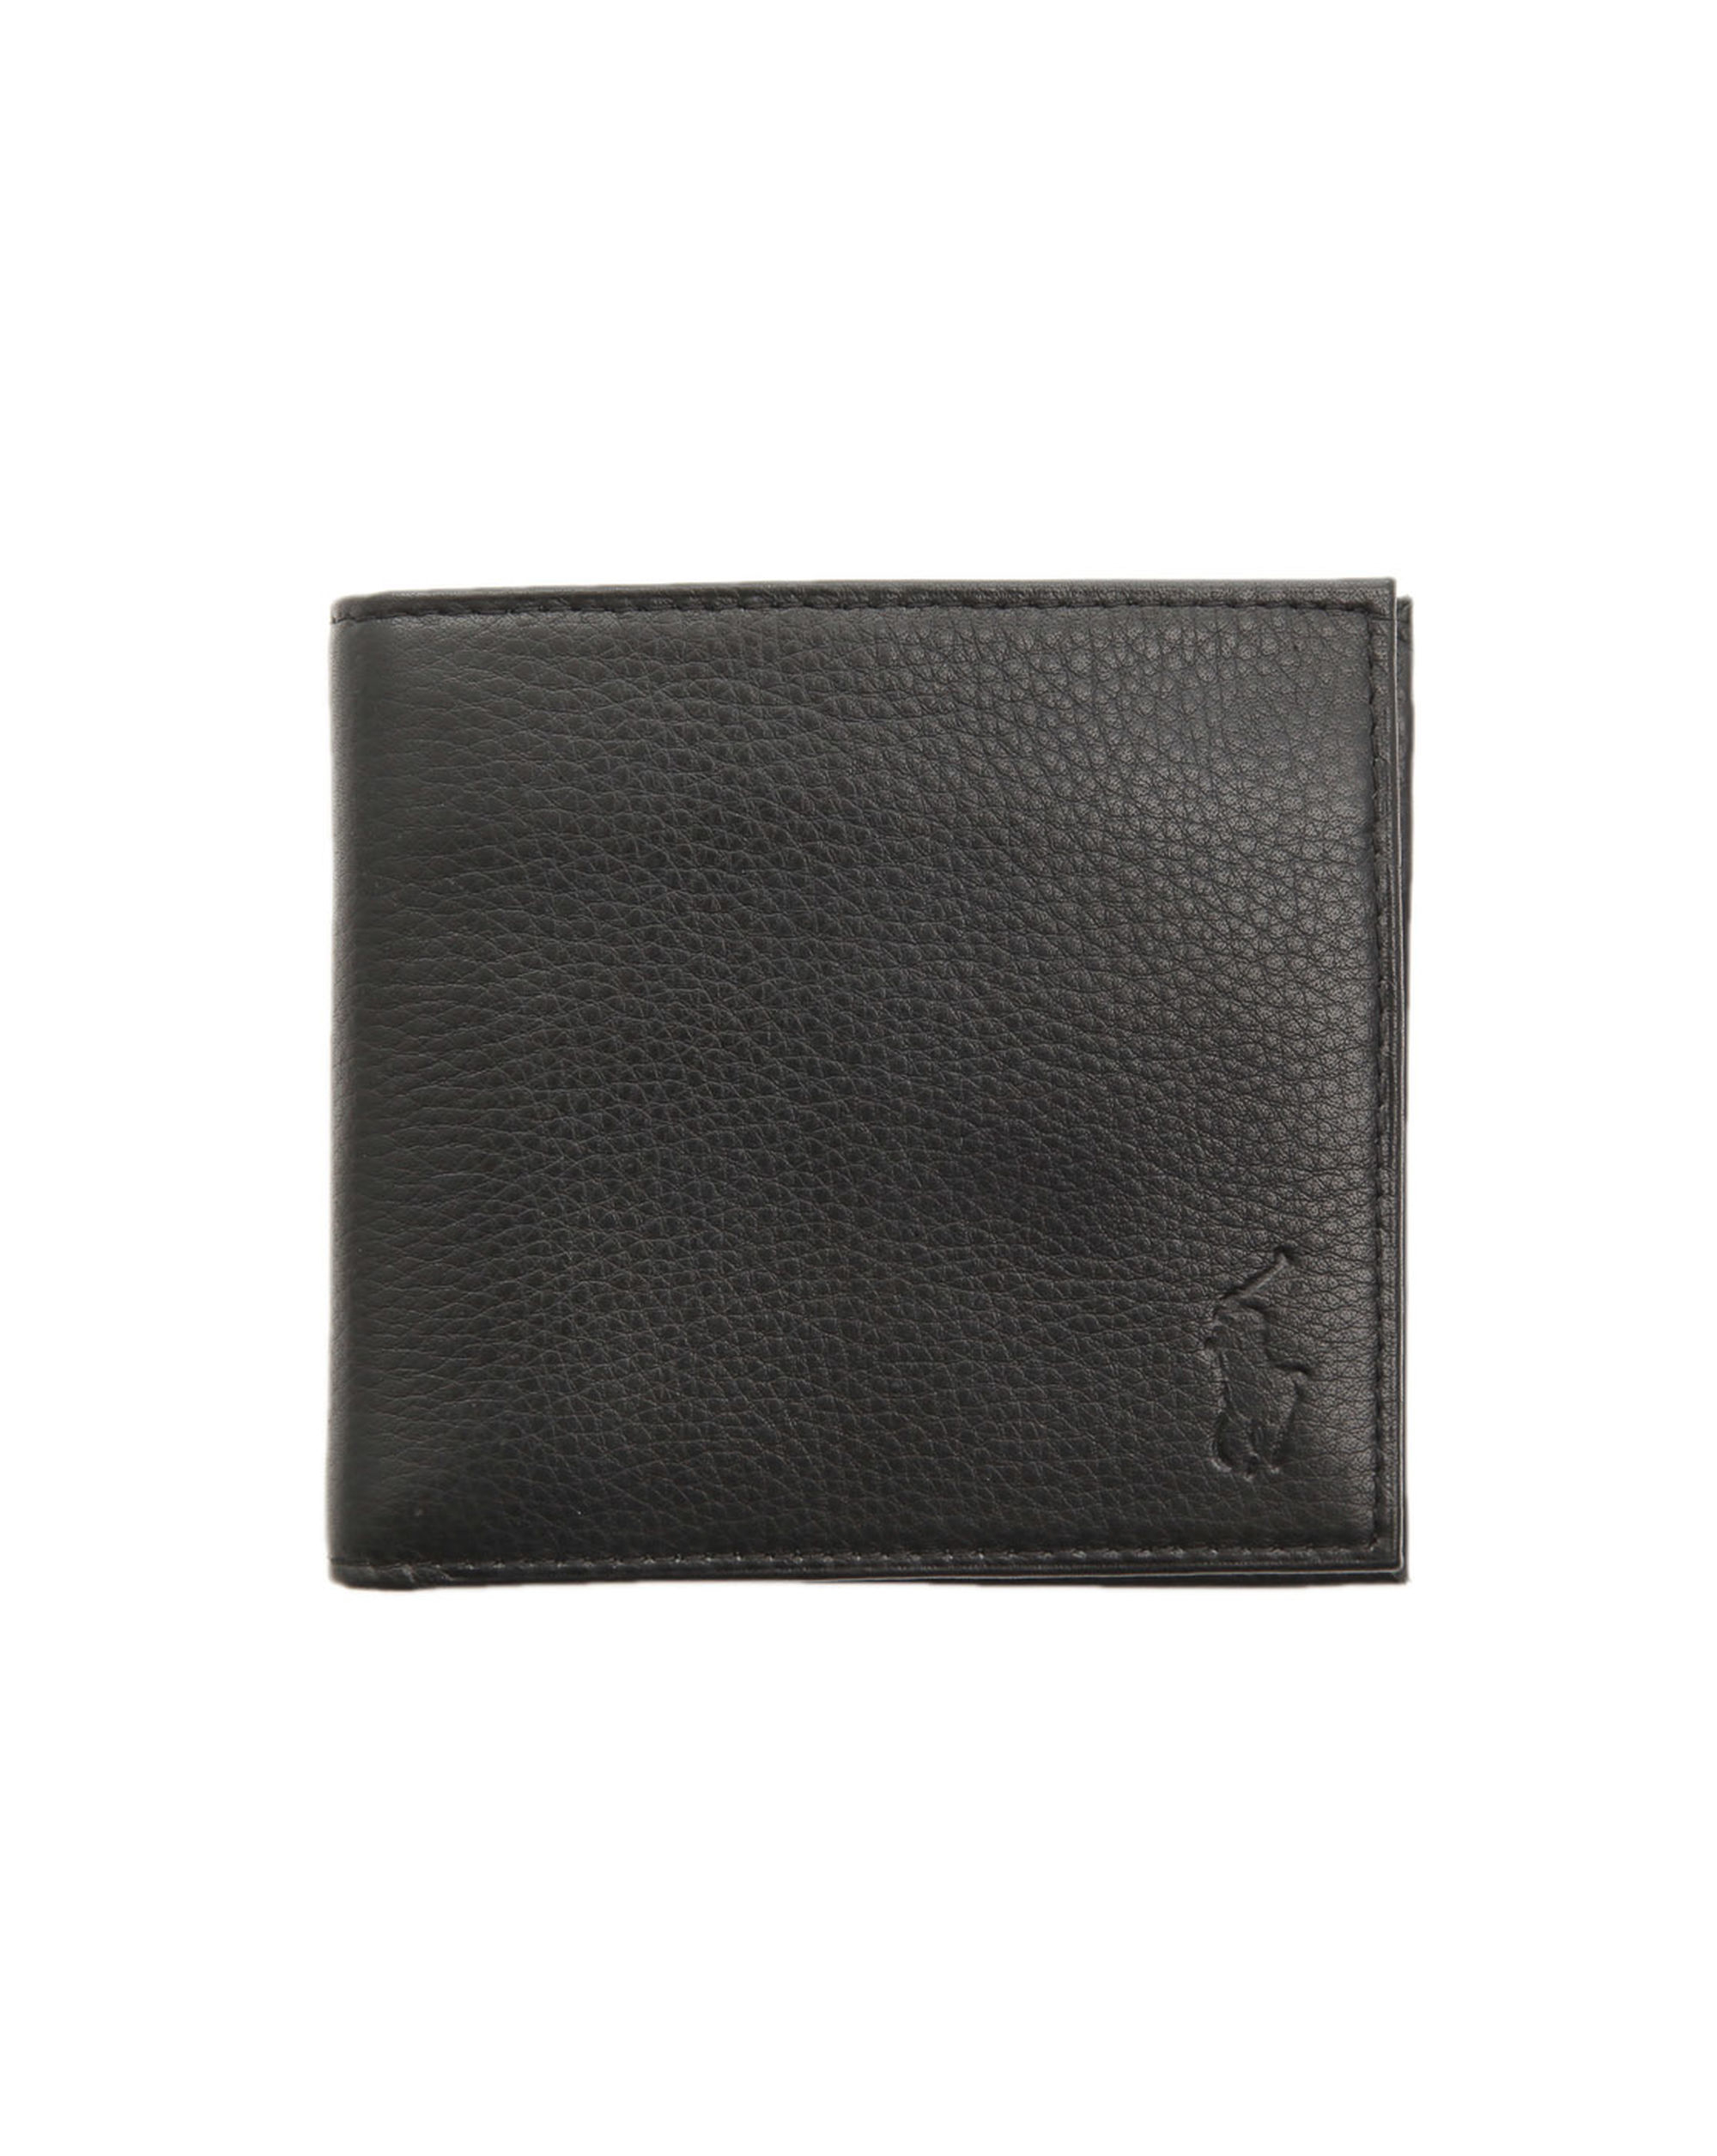 Polo ralph lauren Black Leather Wallet in Black for Men | Lyst